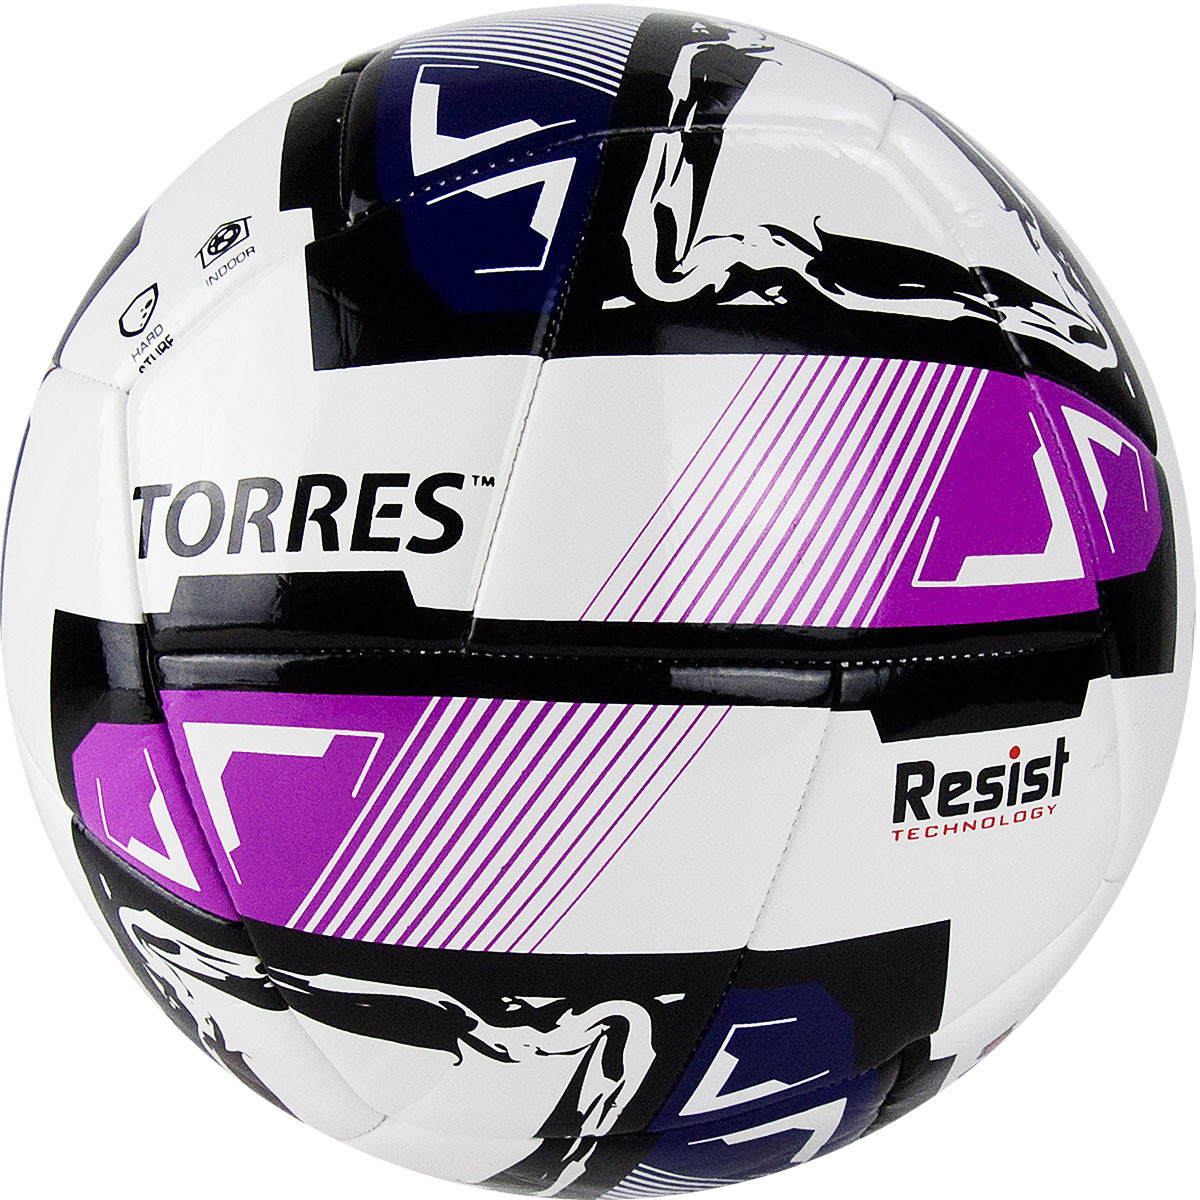 * . TORRES Futsal Resist, FS321024, .4, 24 .,, 3 .., ., -